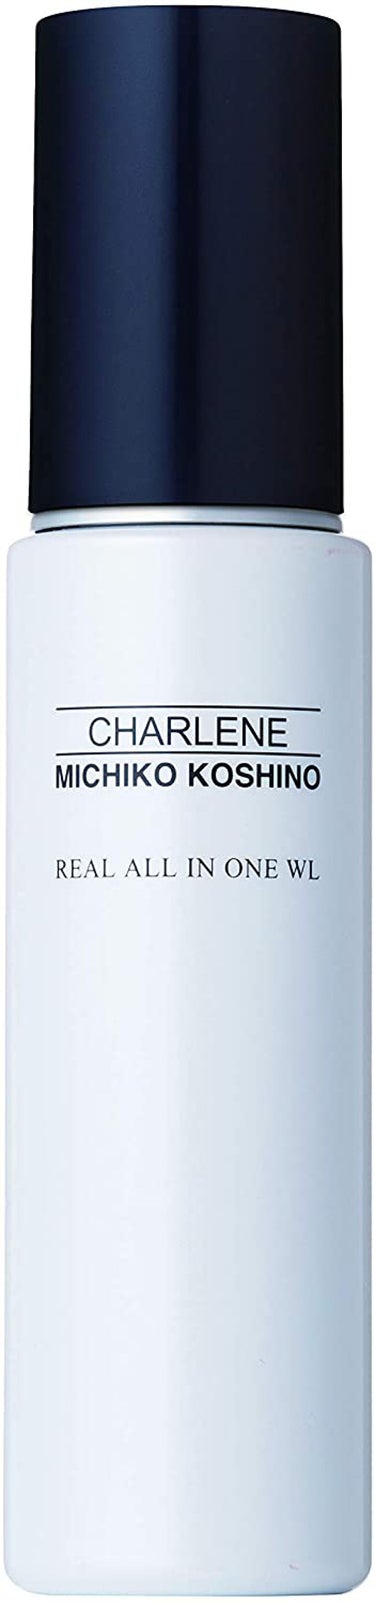 CHARLENE/MICHIKO KOSHINO 薬用美白 リアルオールインワン リキッド